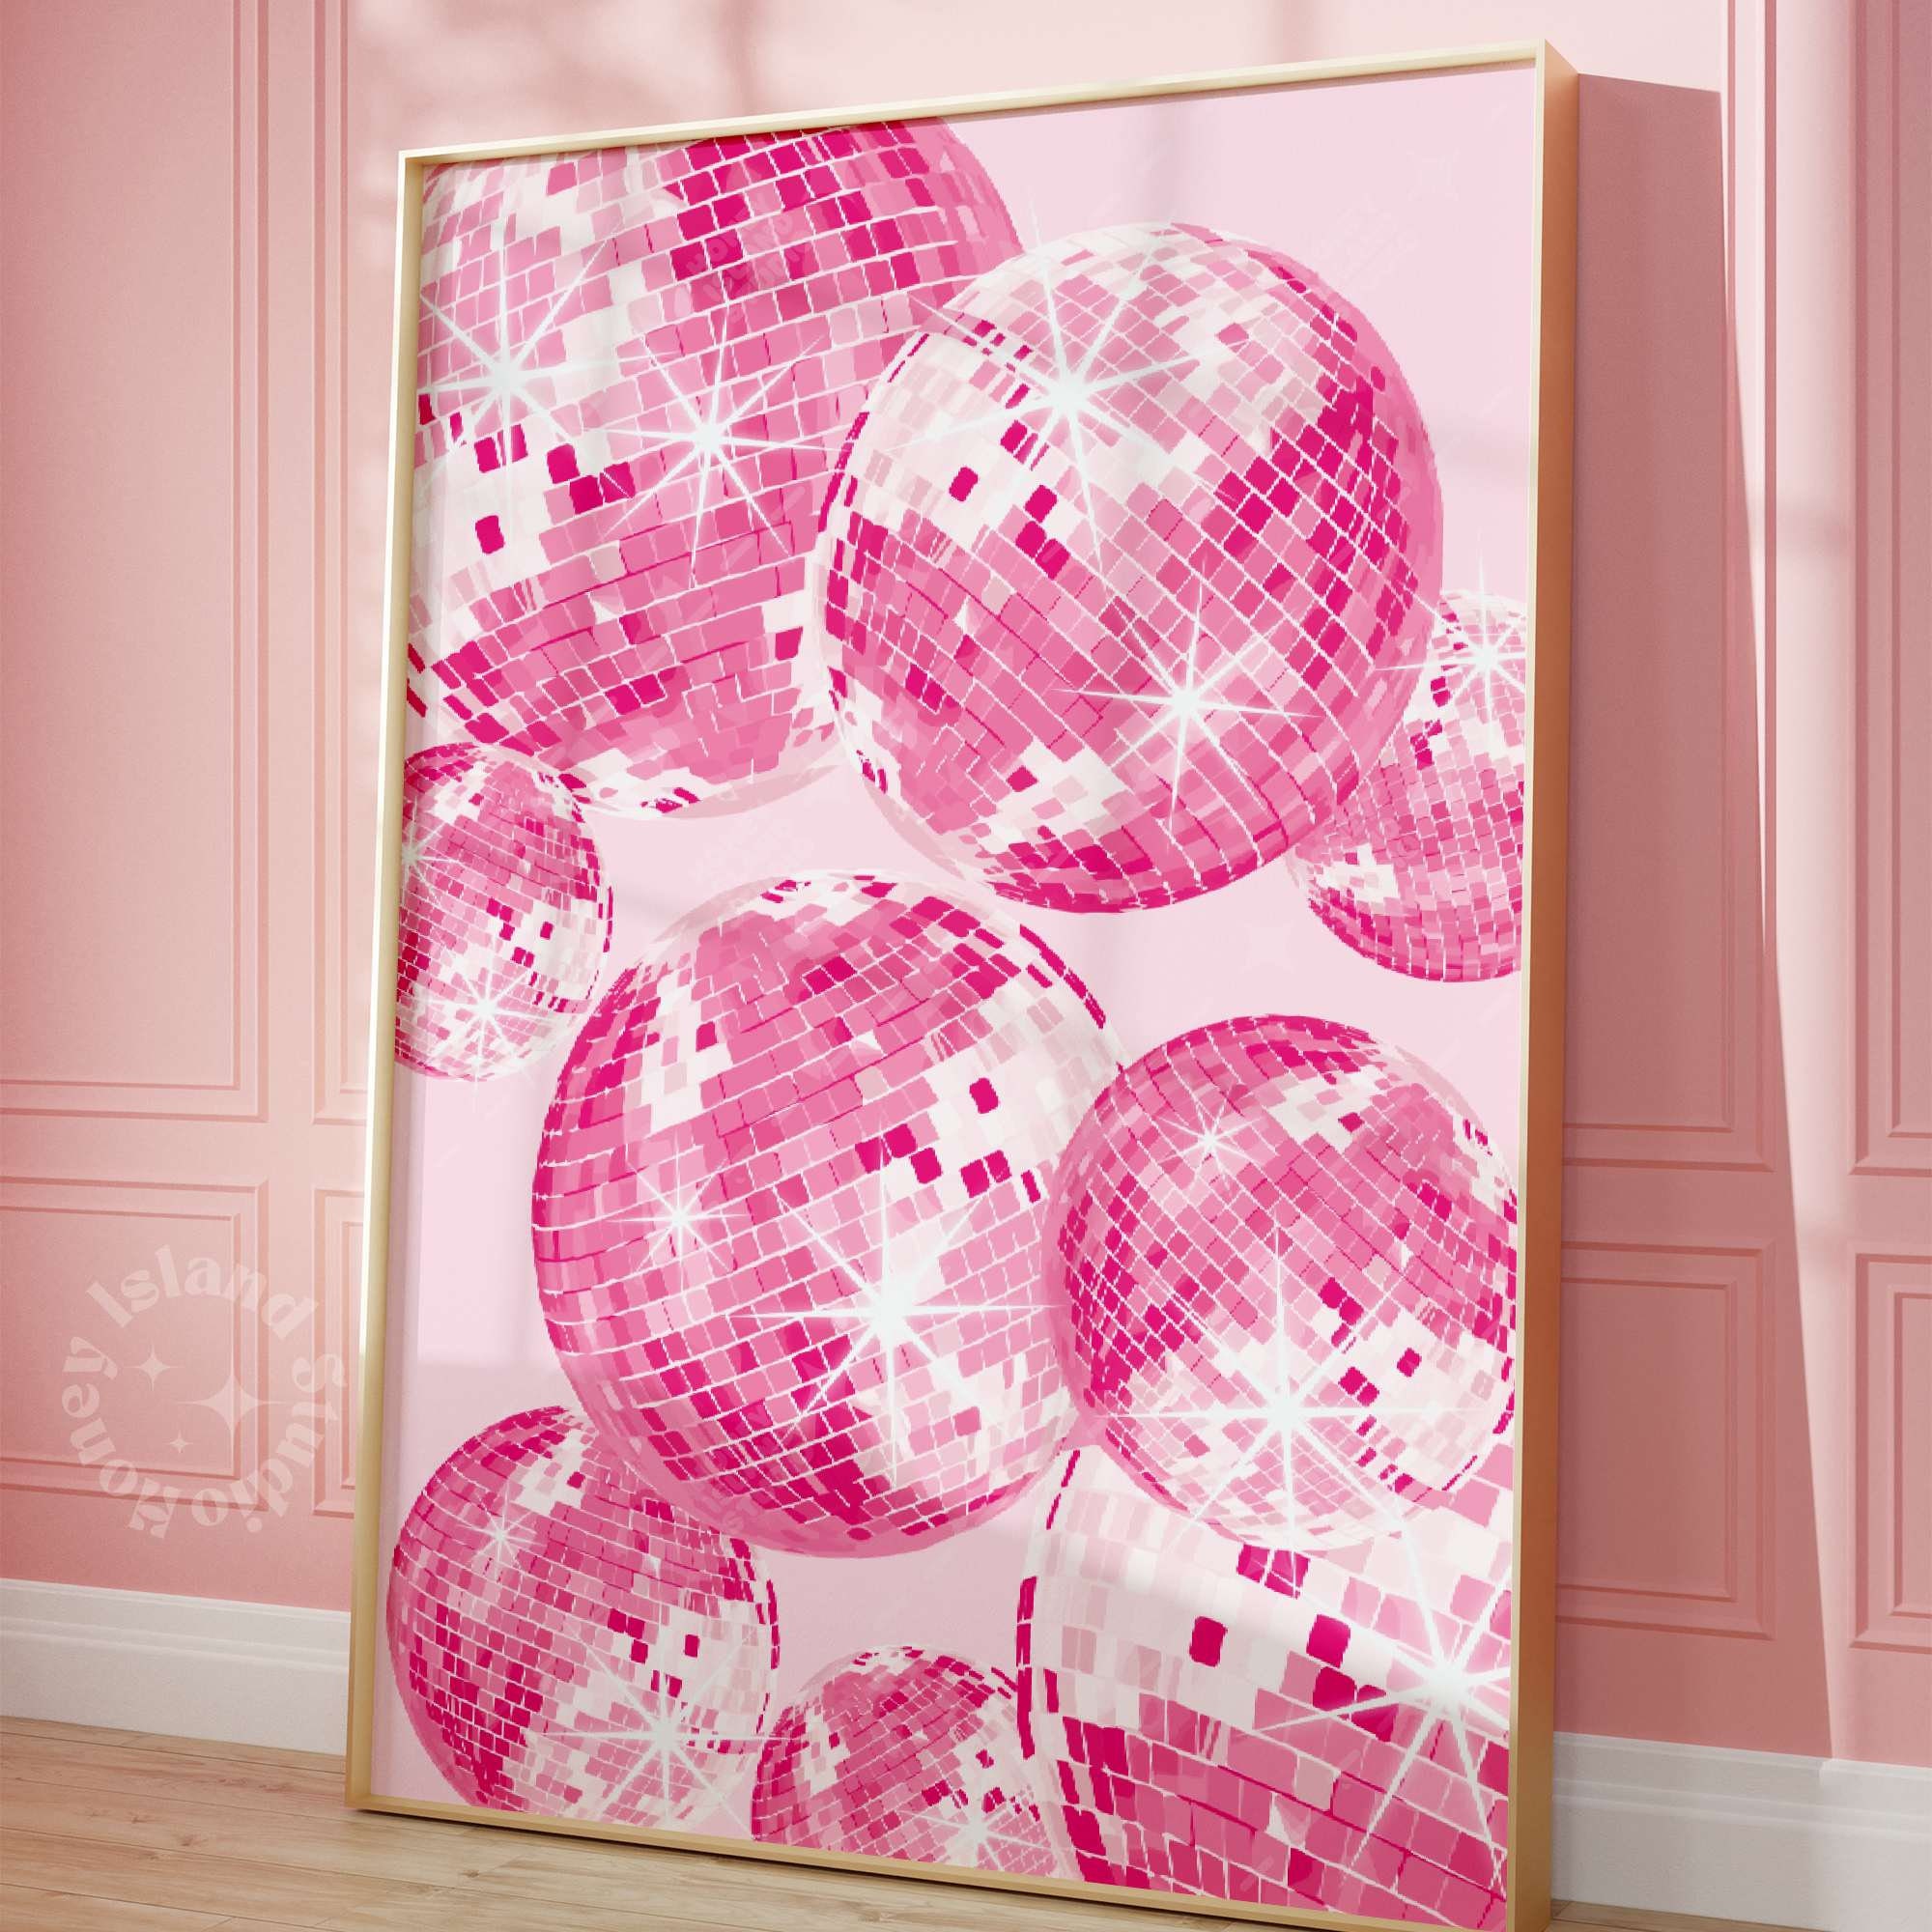 Dazzling Pink Disco Ball Shining On Wood by Hey Bre! Creative Studio Print